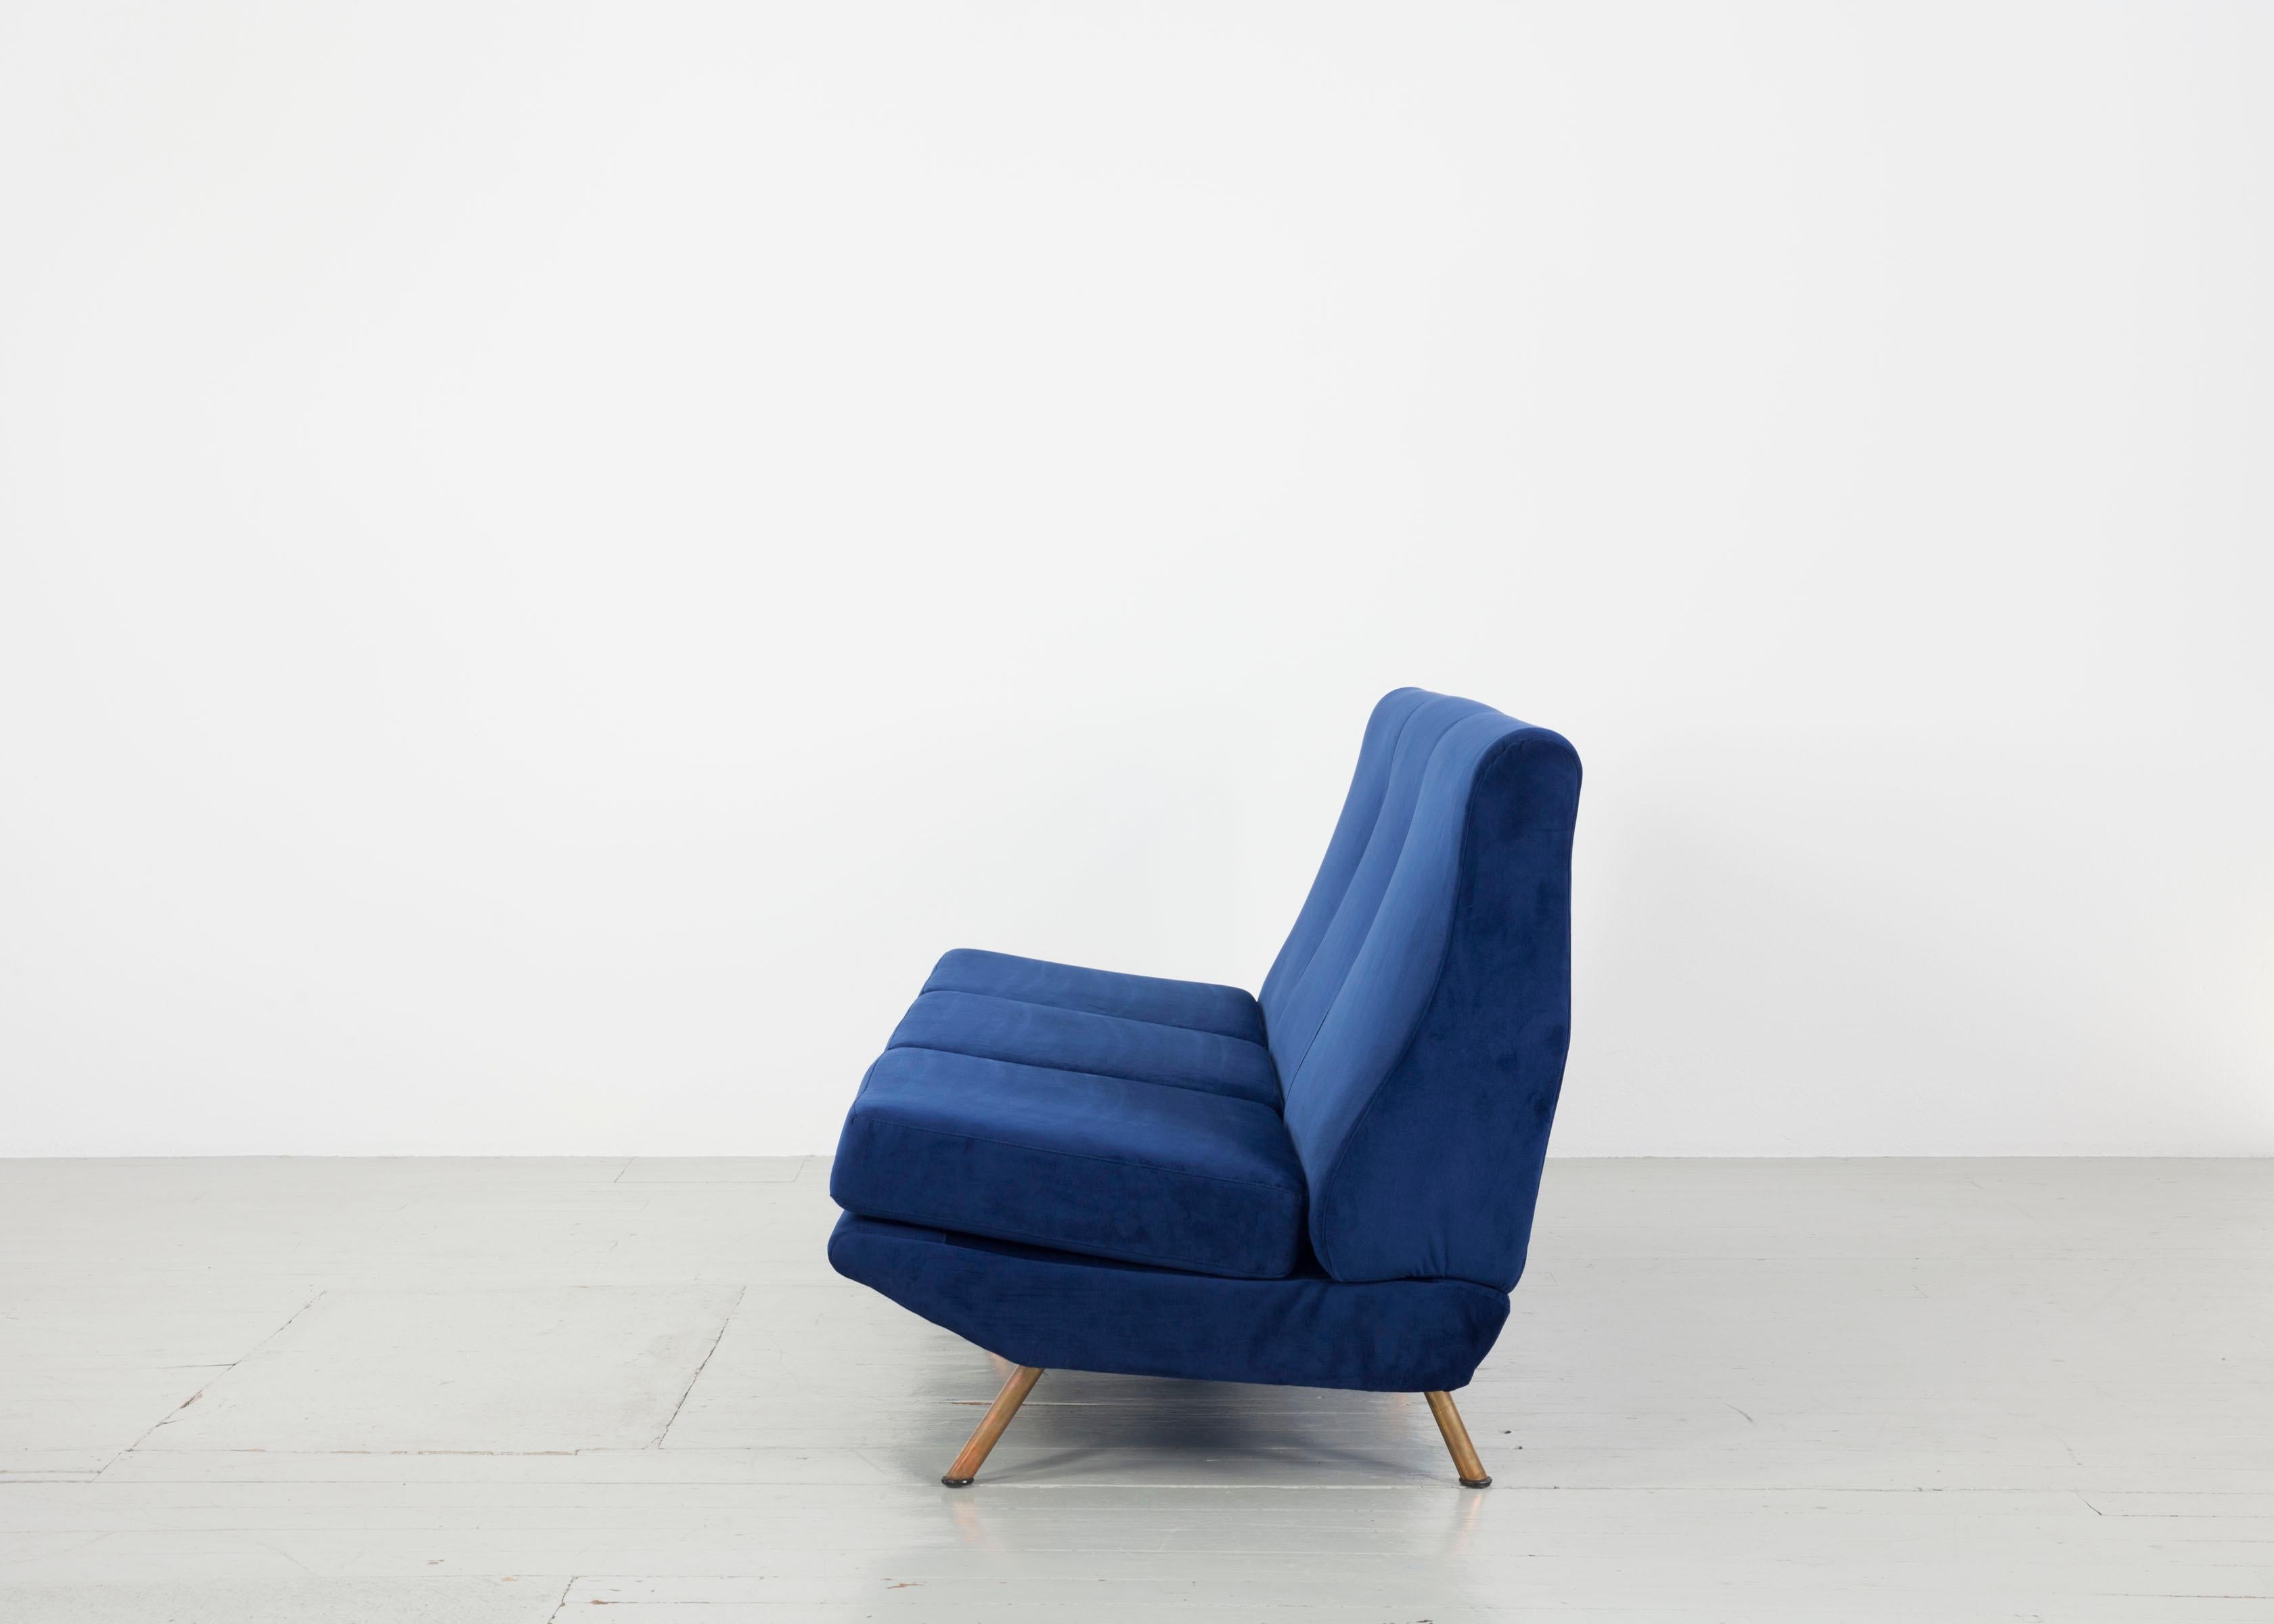 Velvet Deep Blue Three-Seat Sofa Model “Triennale”, Marco Zanuso, Arflex, 1956 For Sale 1